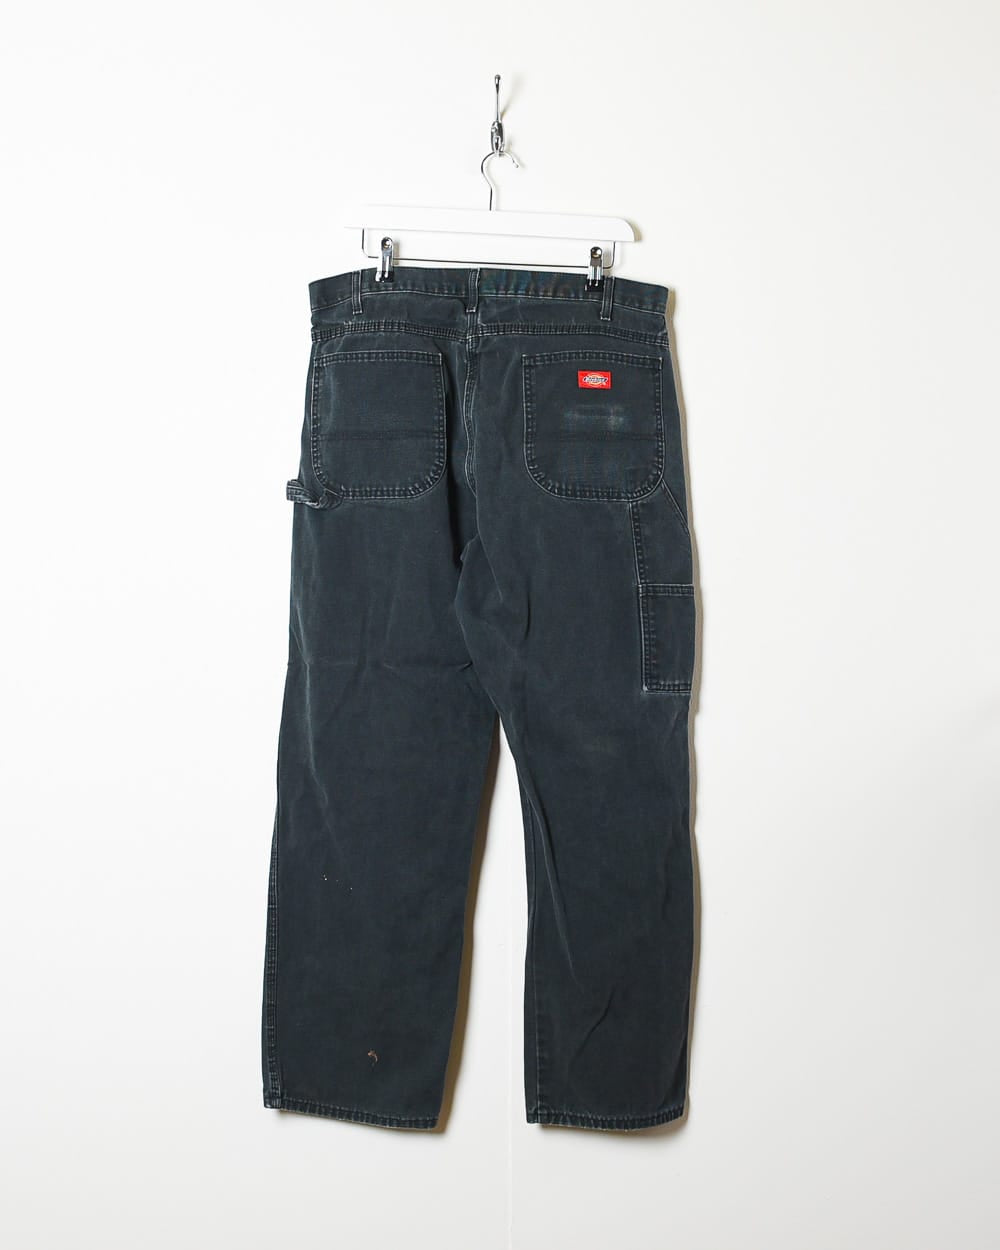 Black Dickies Distressed Carpenter Jeans - W36 L30